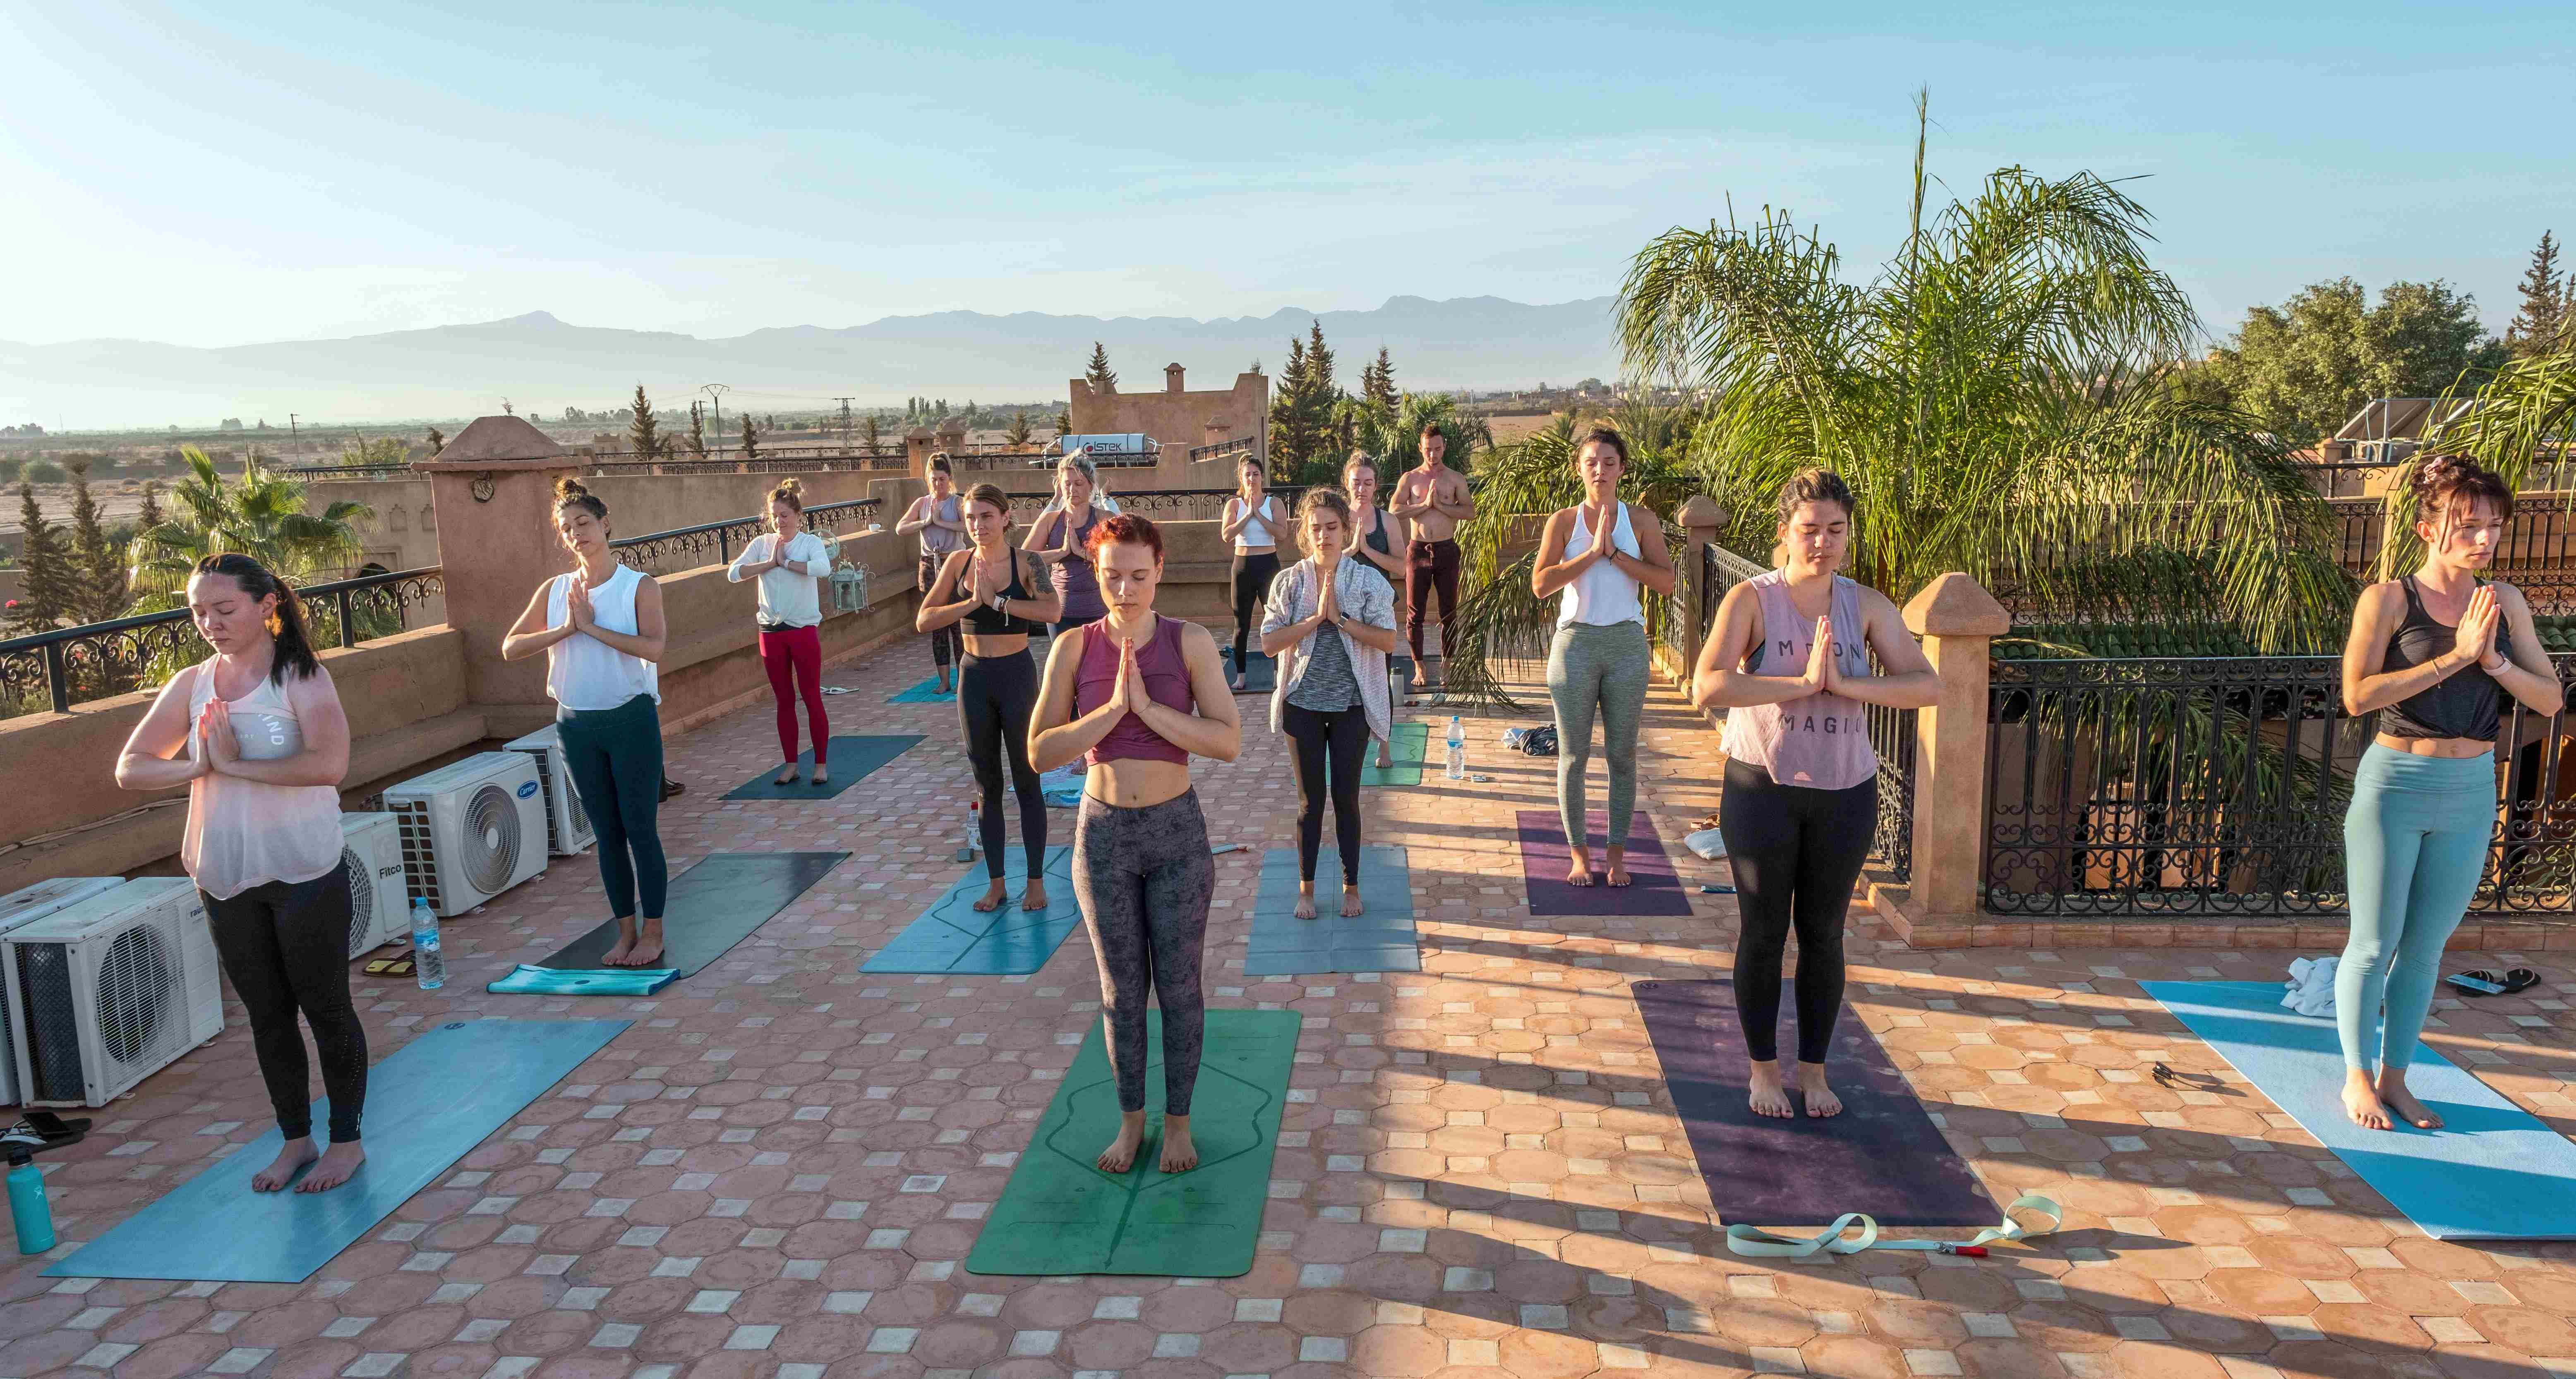 TrovaTrip yoga retreat on a rooftop in Morocco lead by Chelsea Hofer @chelseasyoga.